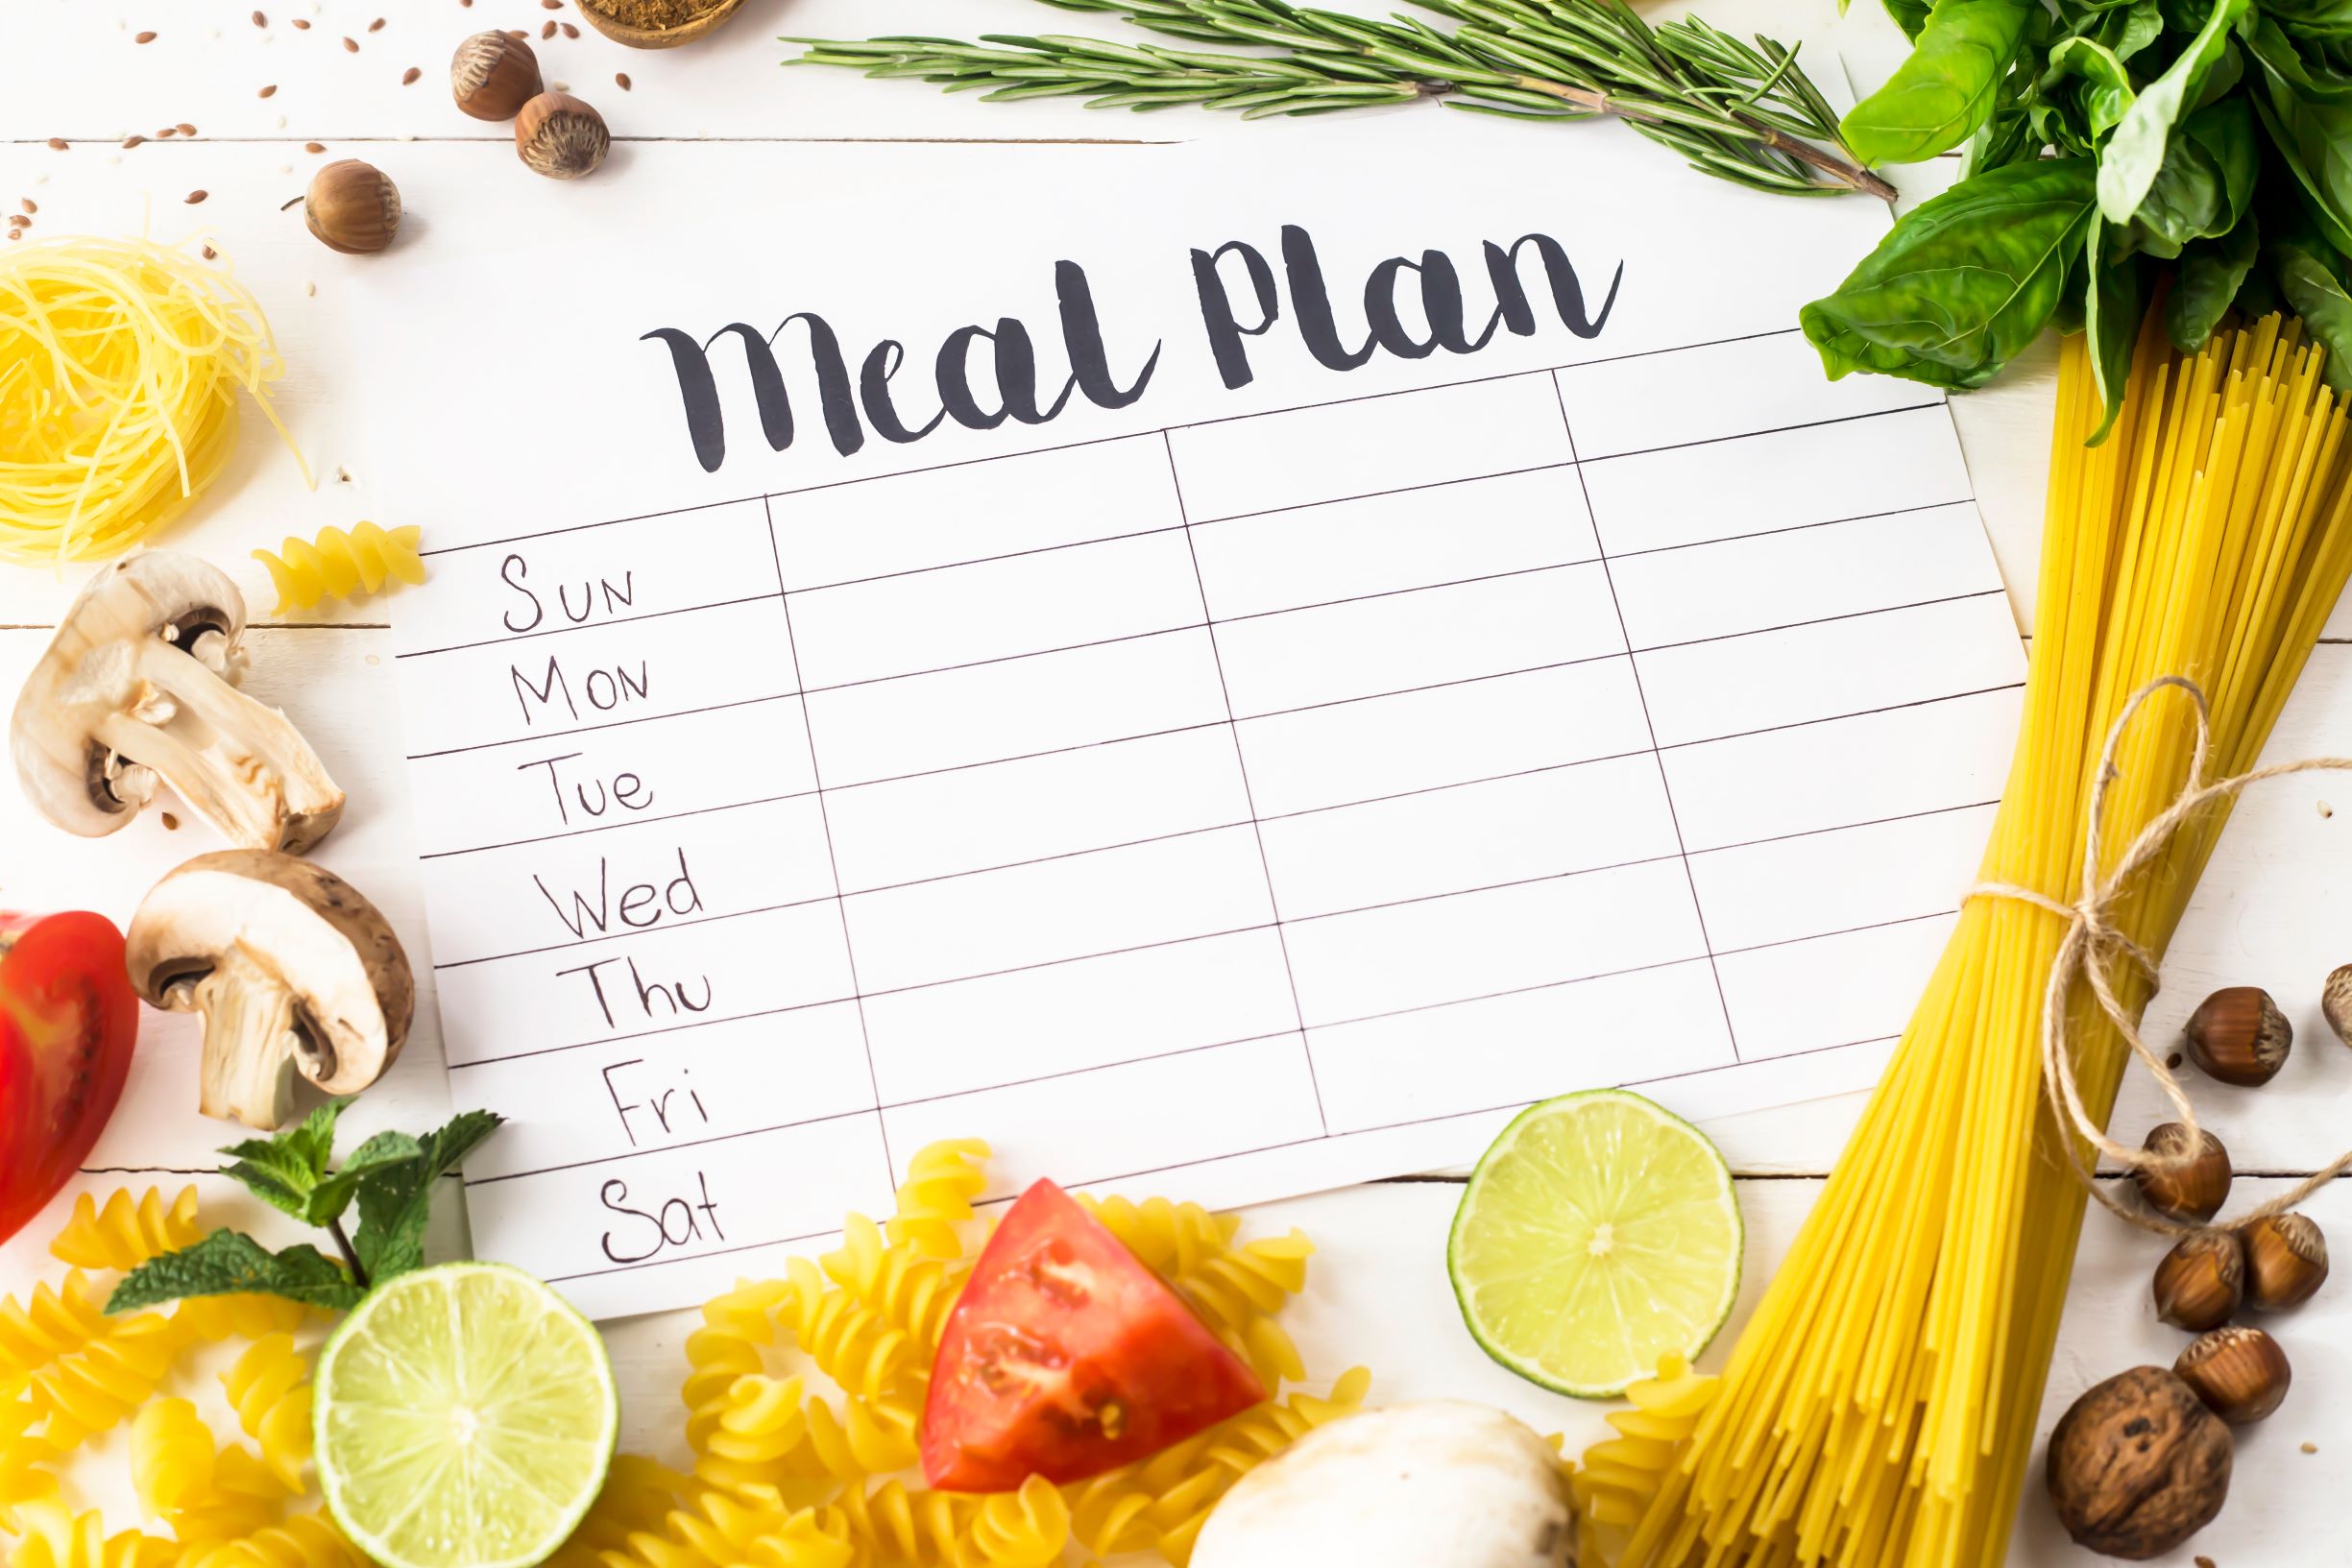 Meal plan weekly calendar with veggies surrounding it.